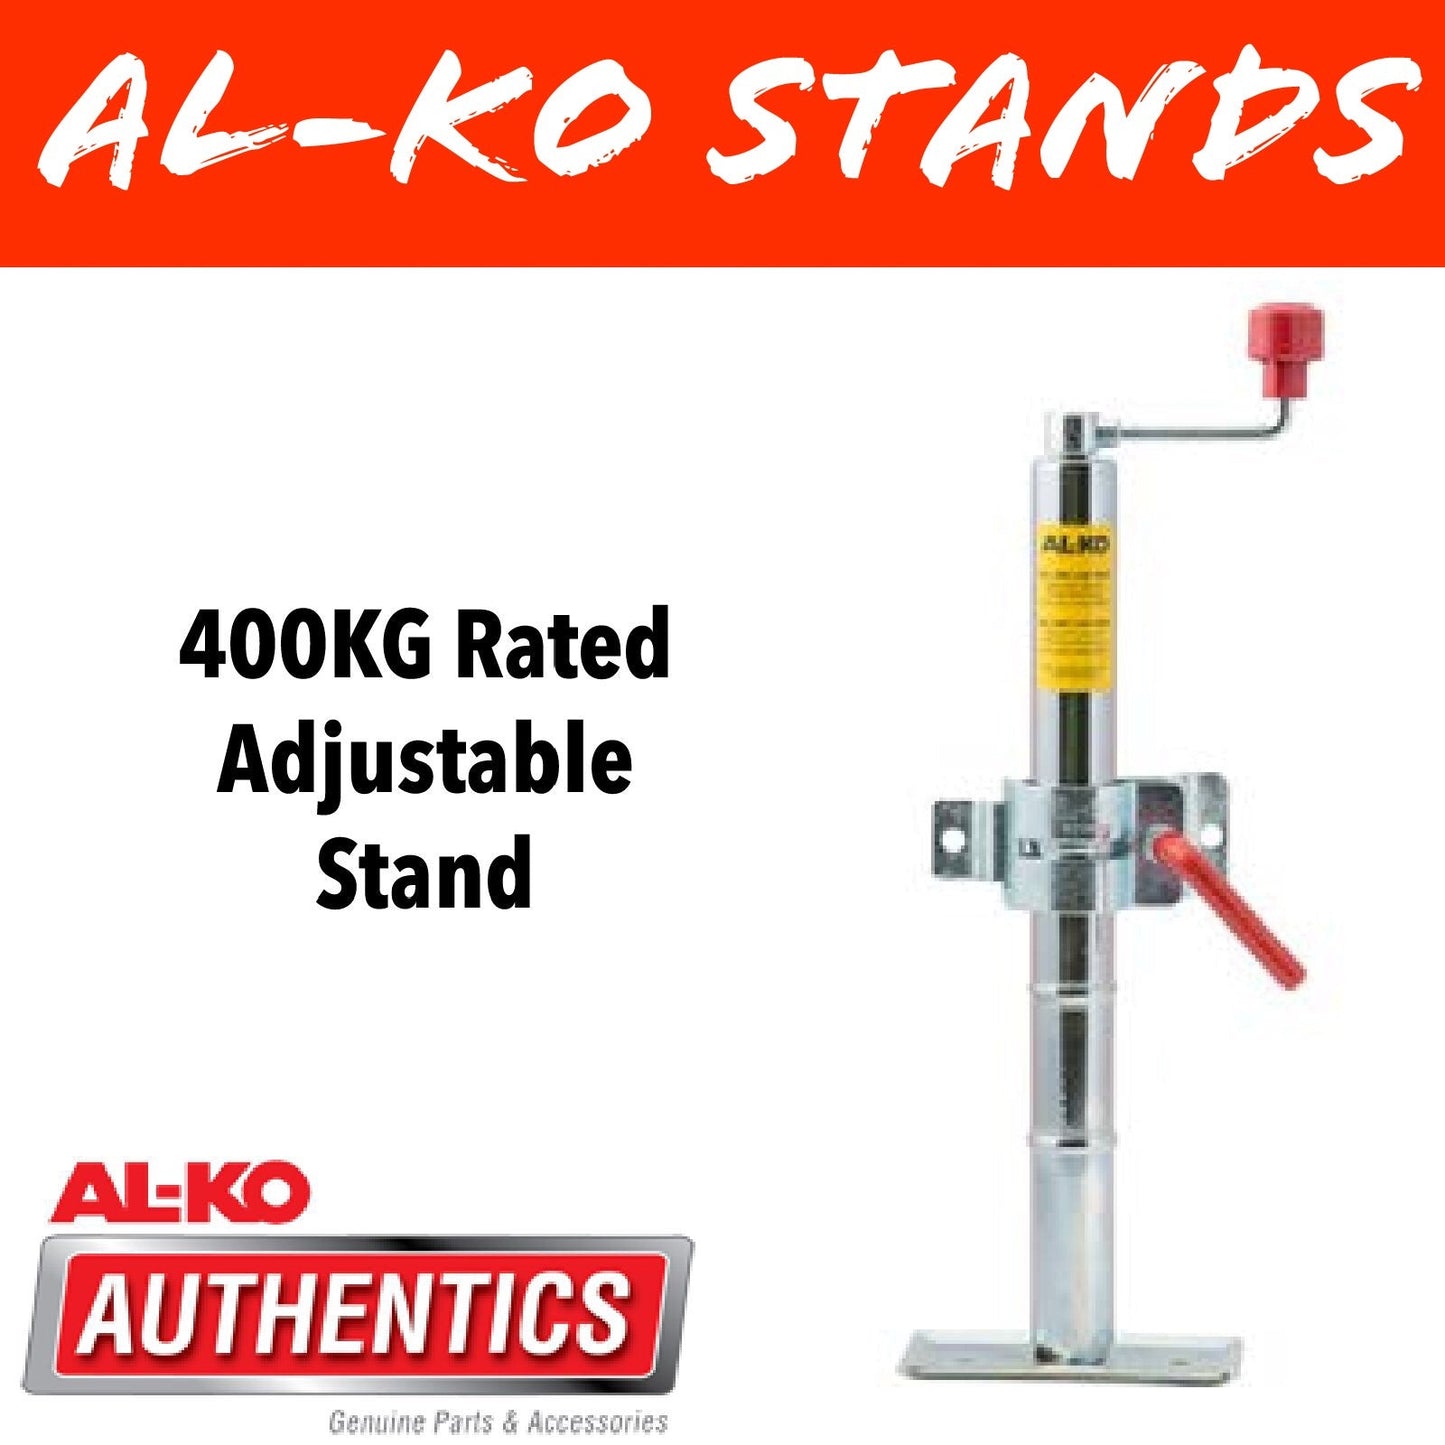 AL-KO Adjustable Stand 400kg Rated